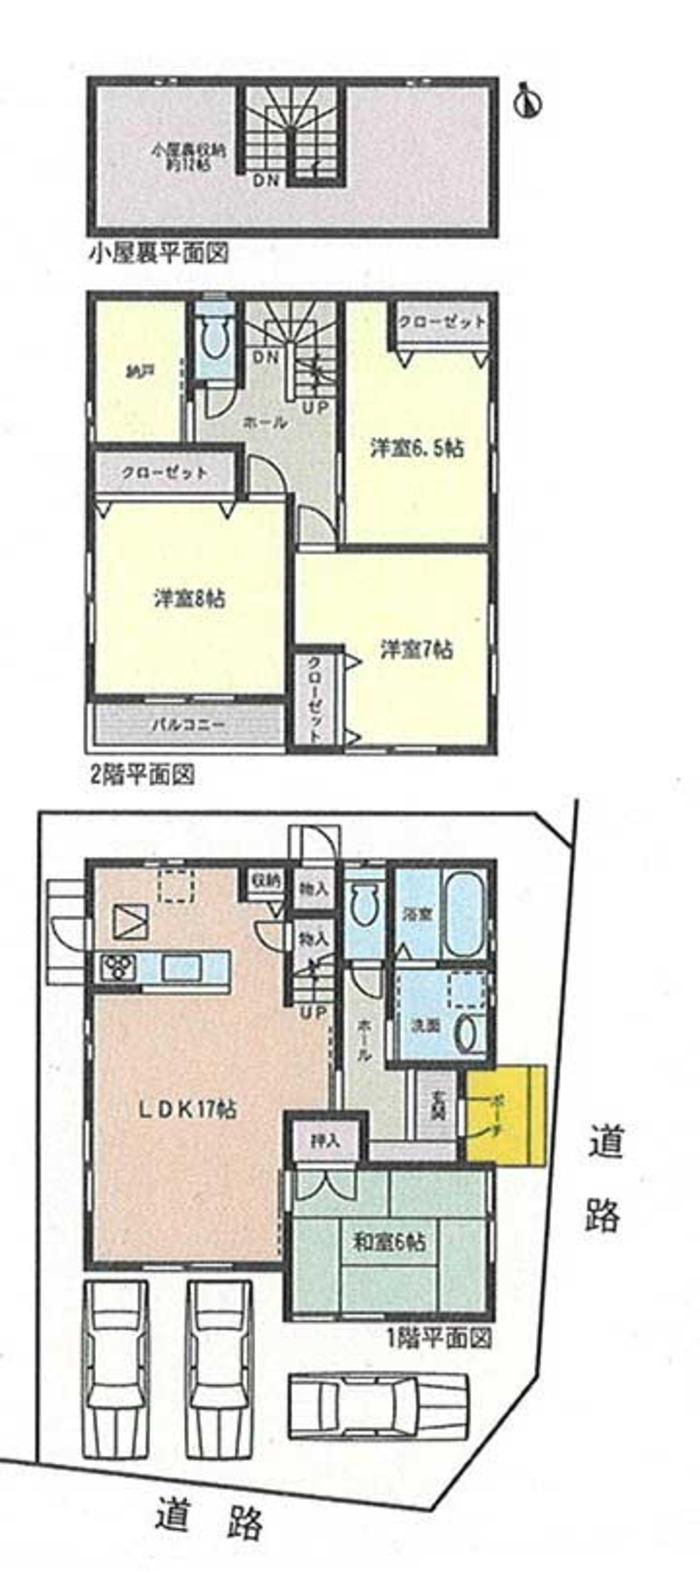 Floor plan. (Building 2), Price 28.8 million yen, 4LDK+S, Land area 120.63 sq m , Building area 117.84 sq m